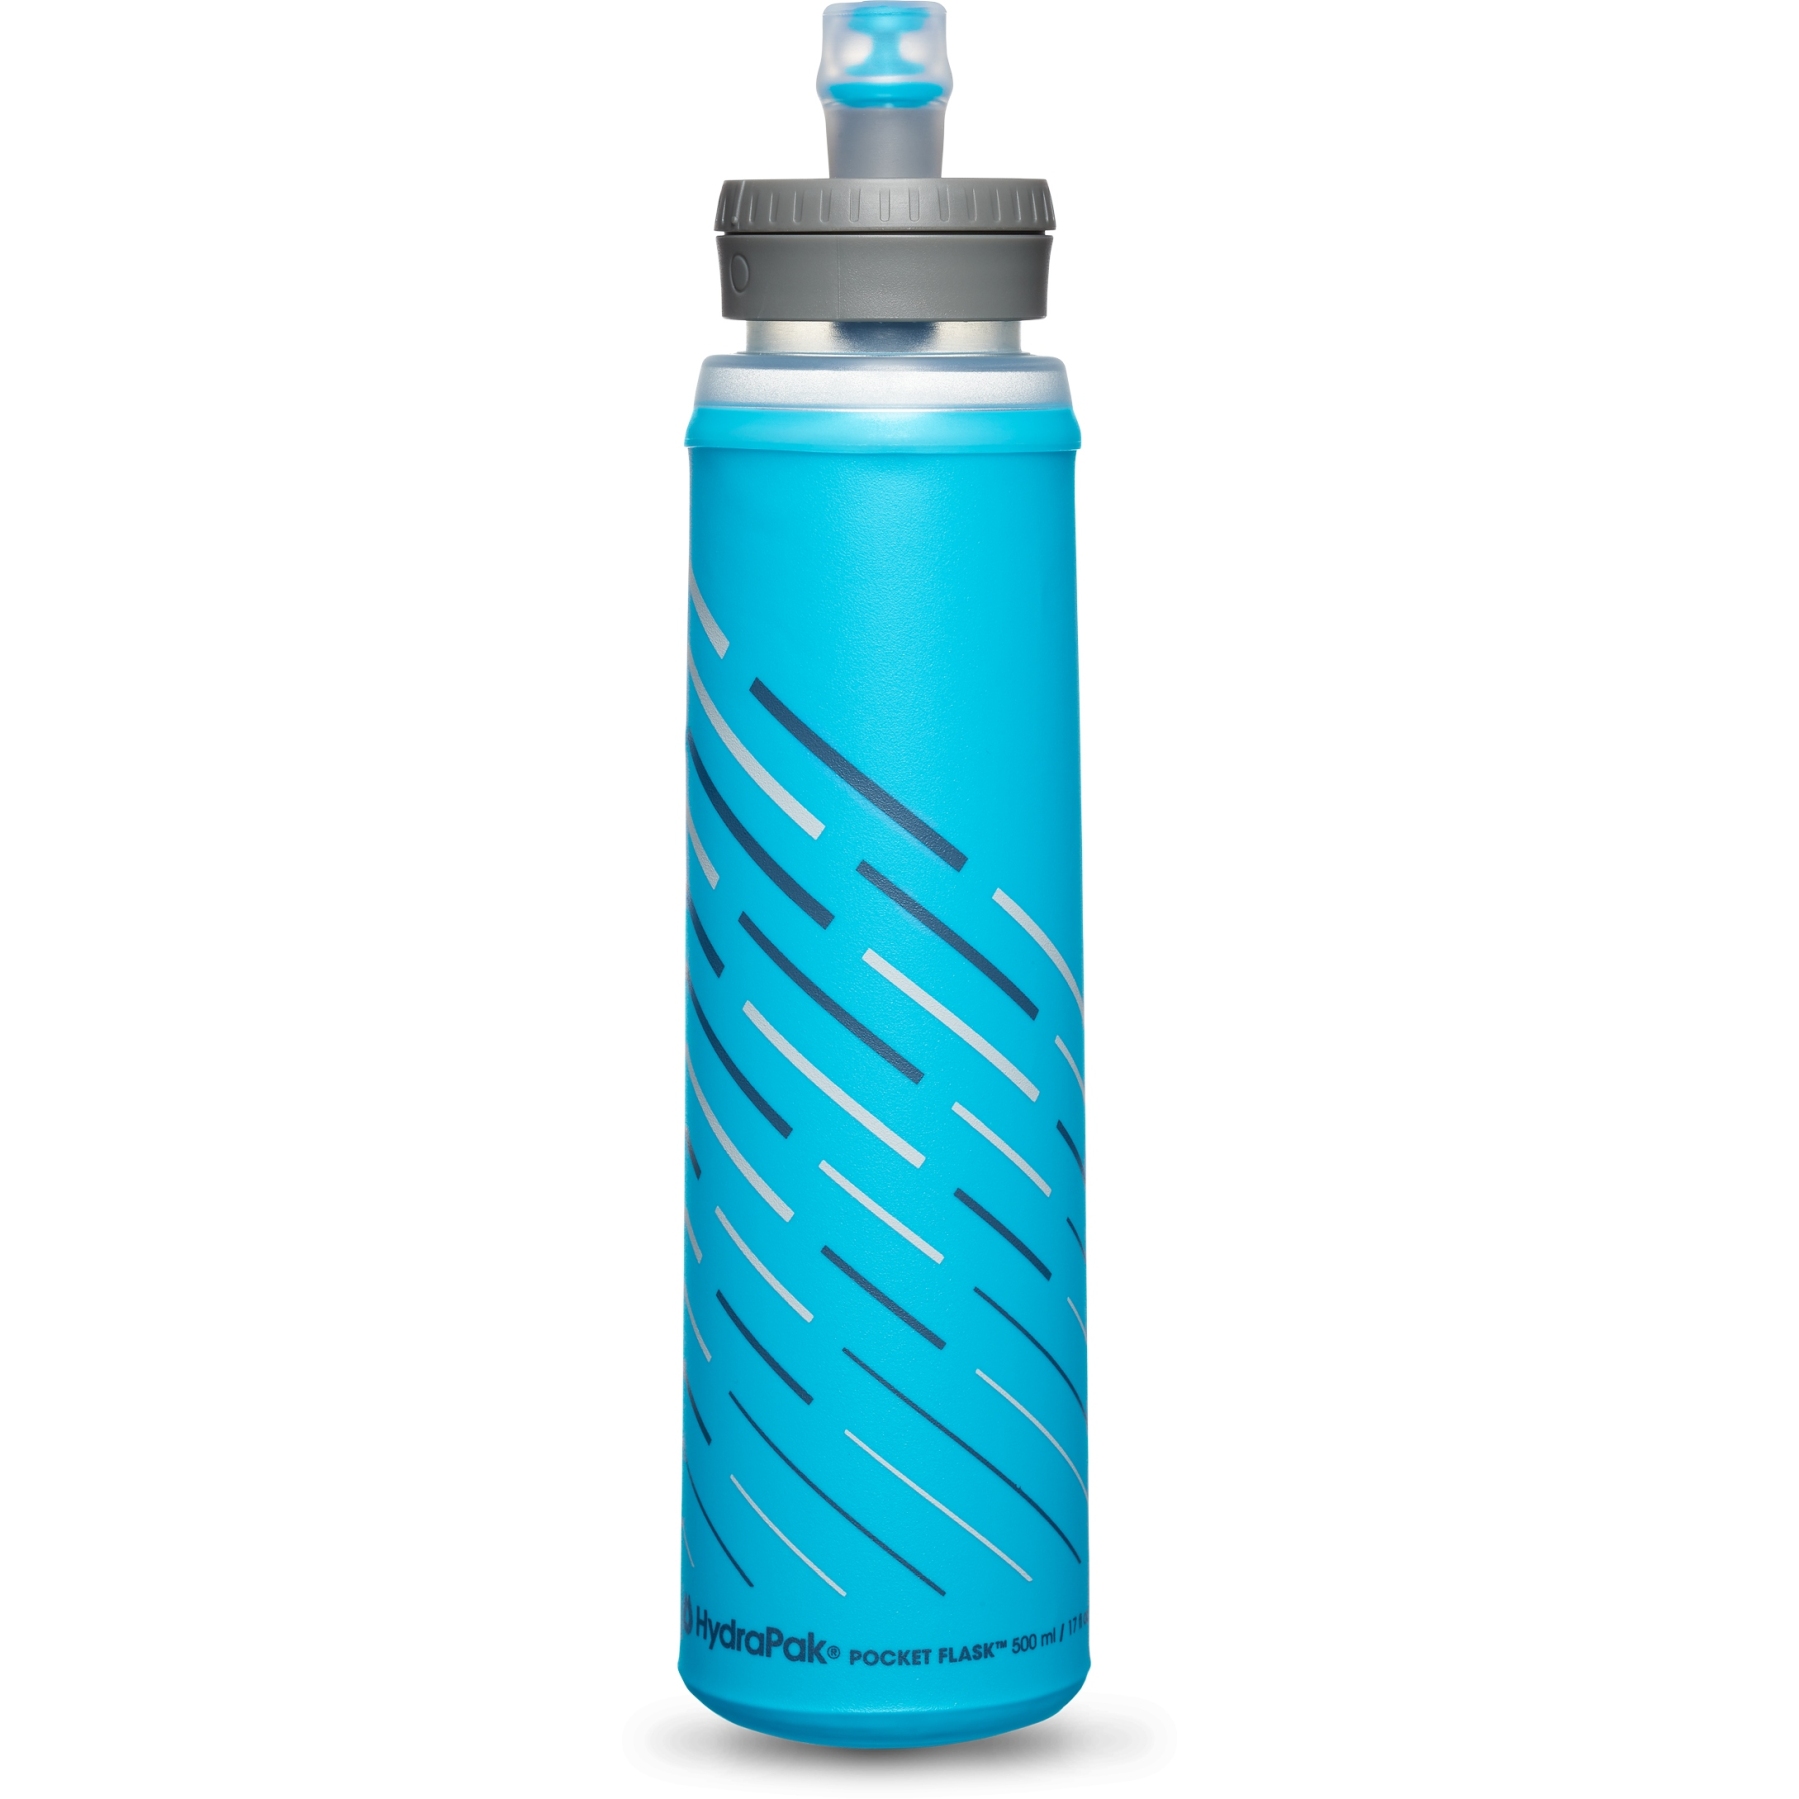 Productfoto van Hydrapak Pocket Flask Opvouwbare Fles - 500 ml - malibu